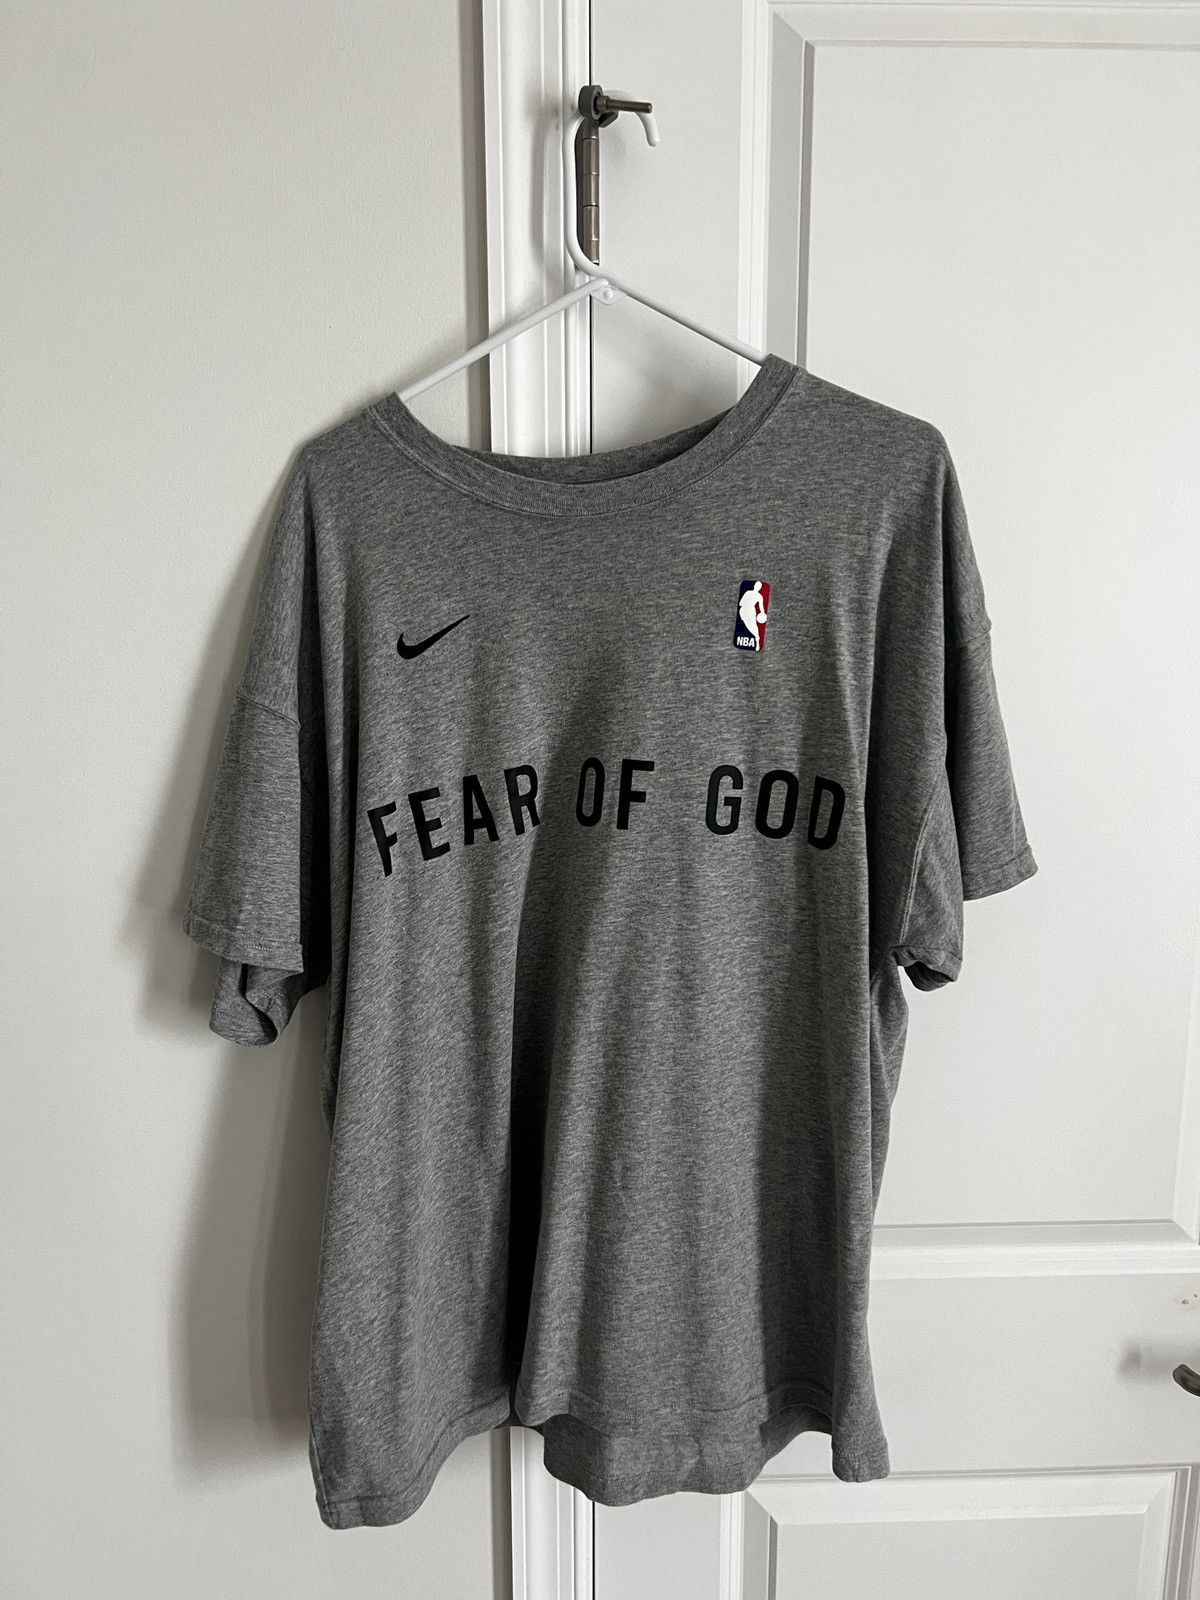 Nike Fear of God x Nike Warm Up T-shirt | Grailed